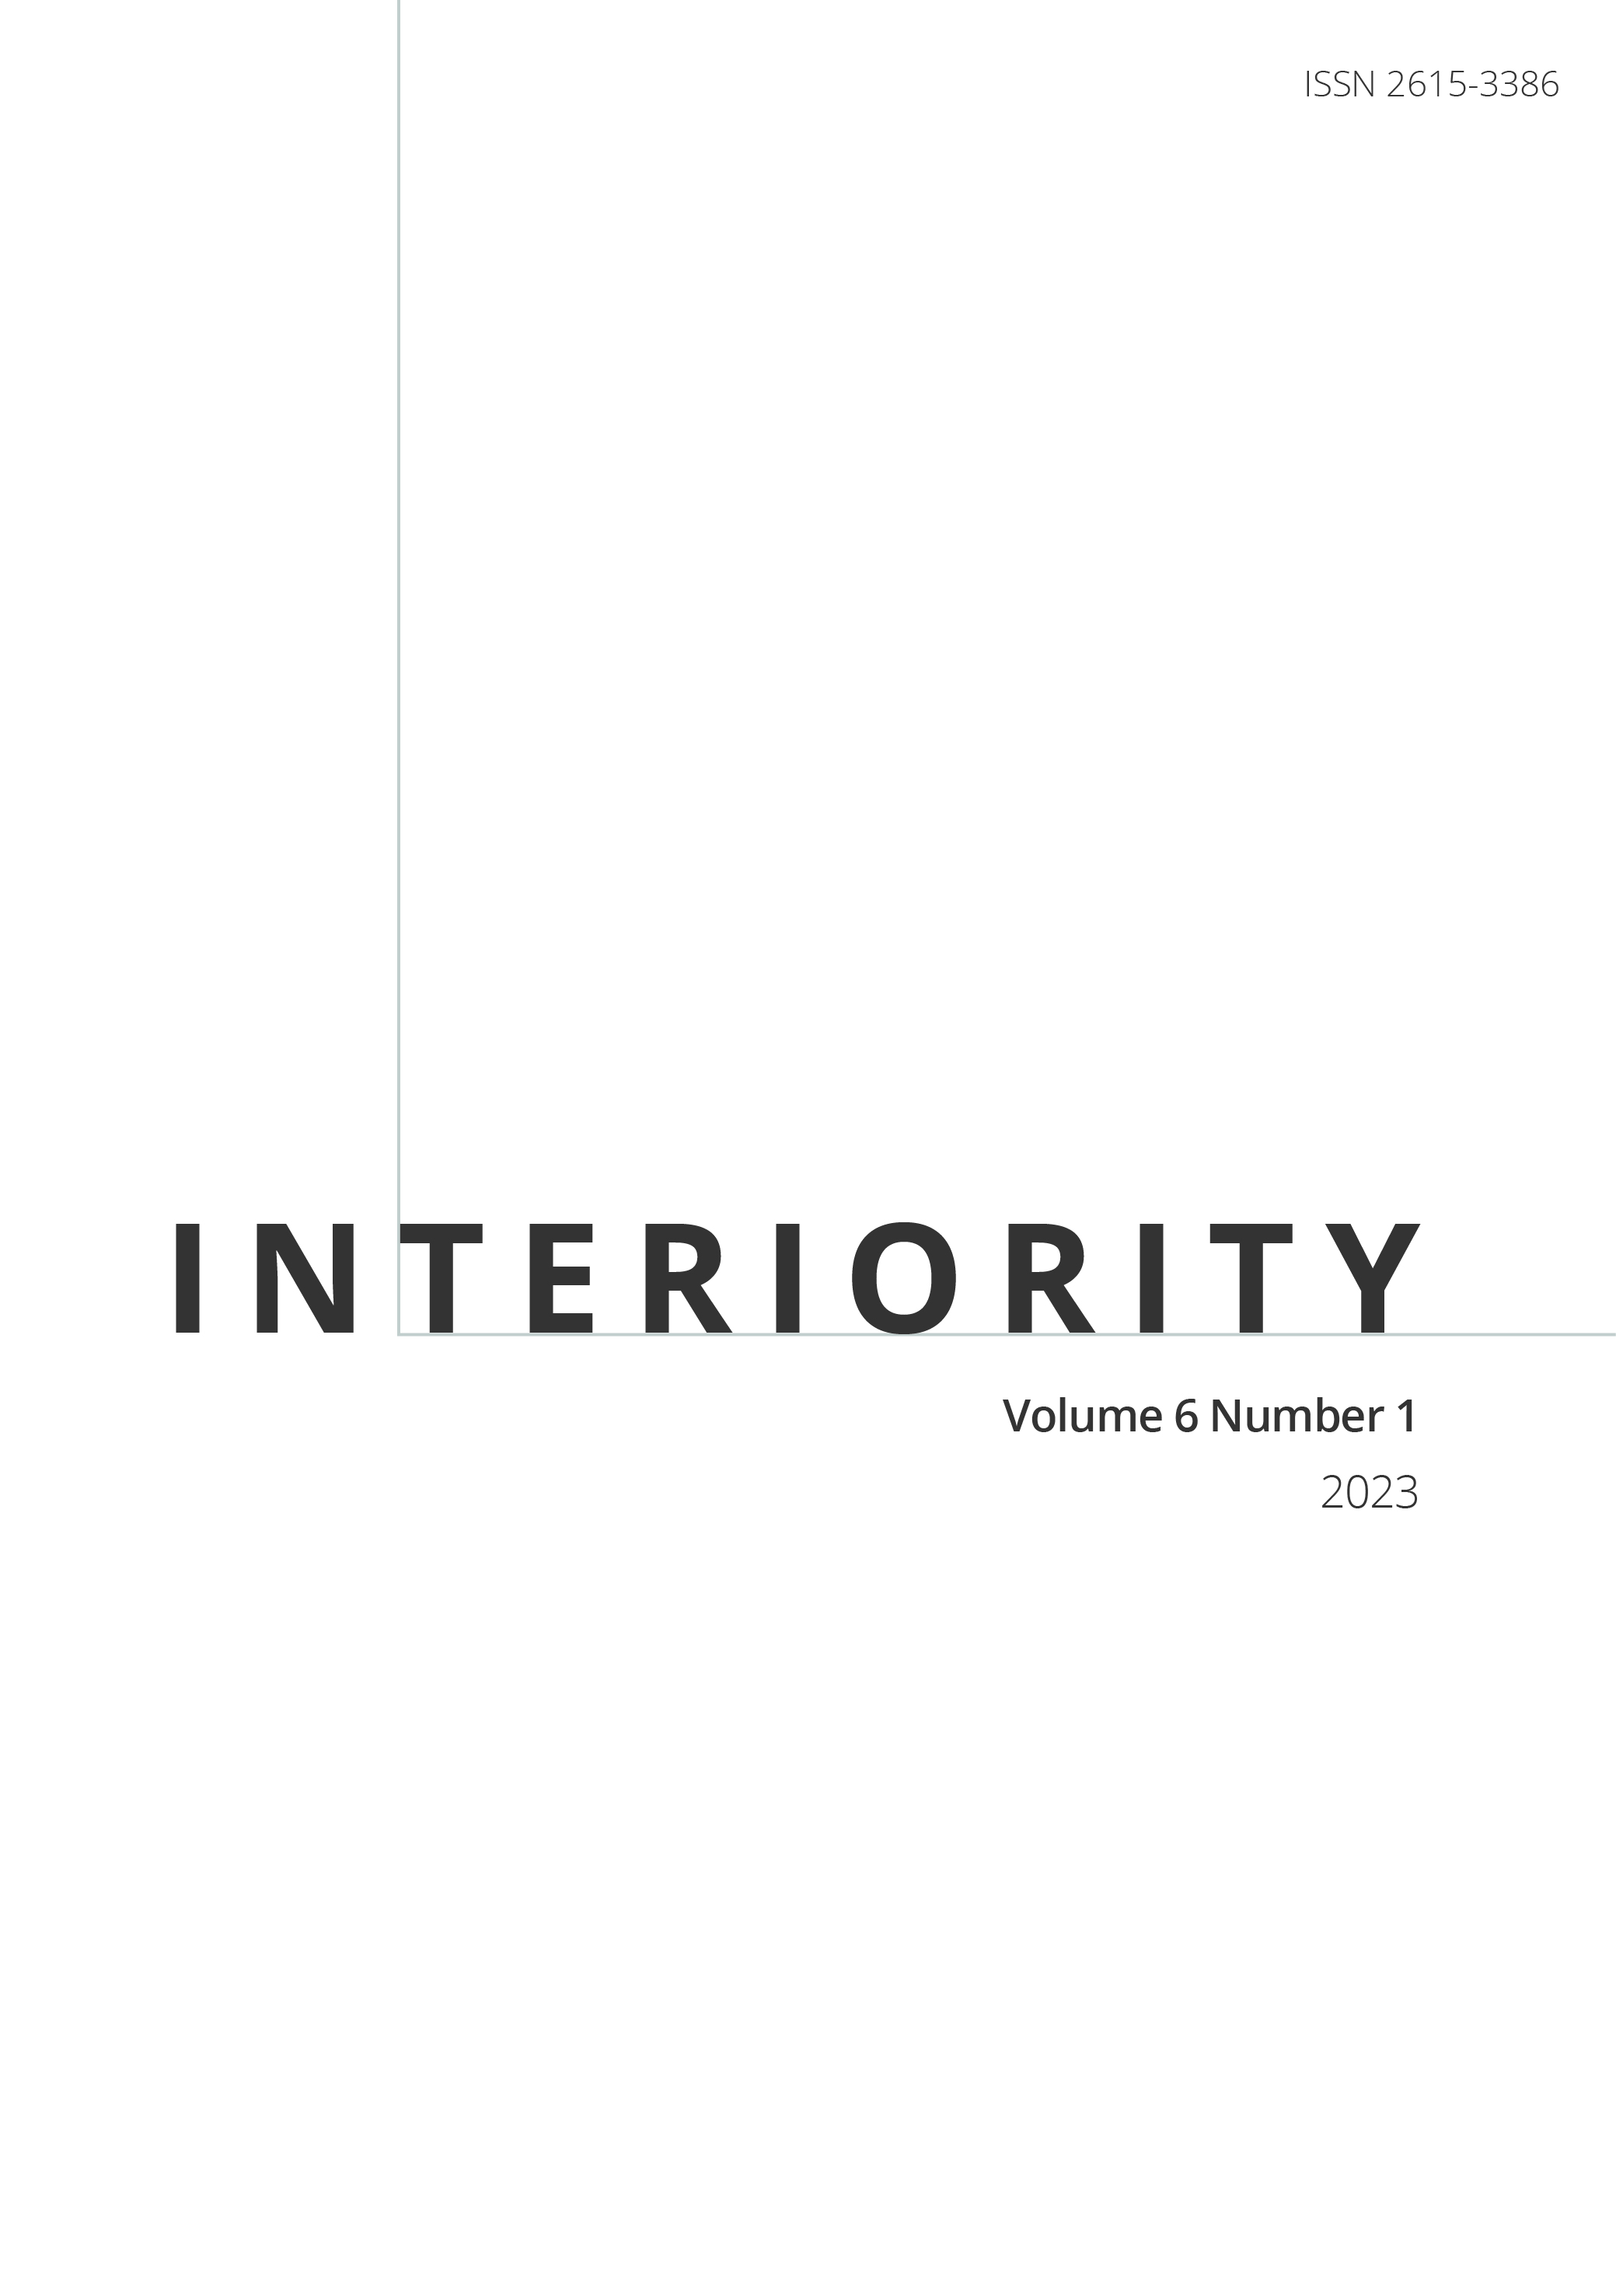 Louis Vuitton in Interior Design issue 4/2012 — YUUKI KITADA ARCHITECT